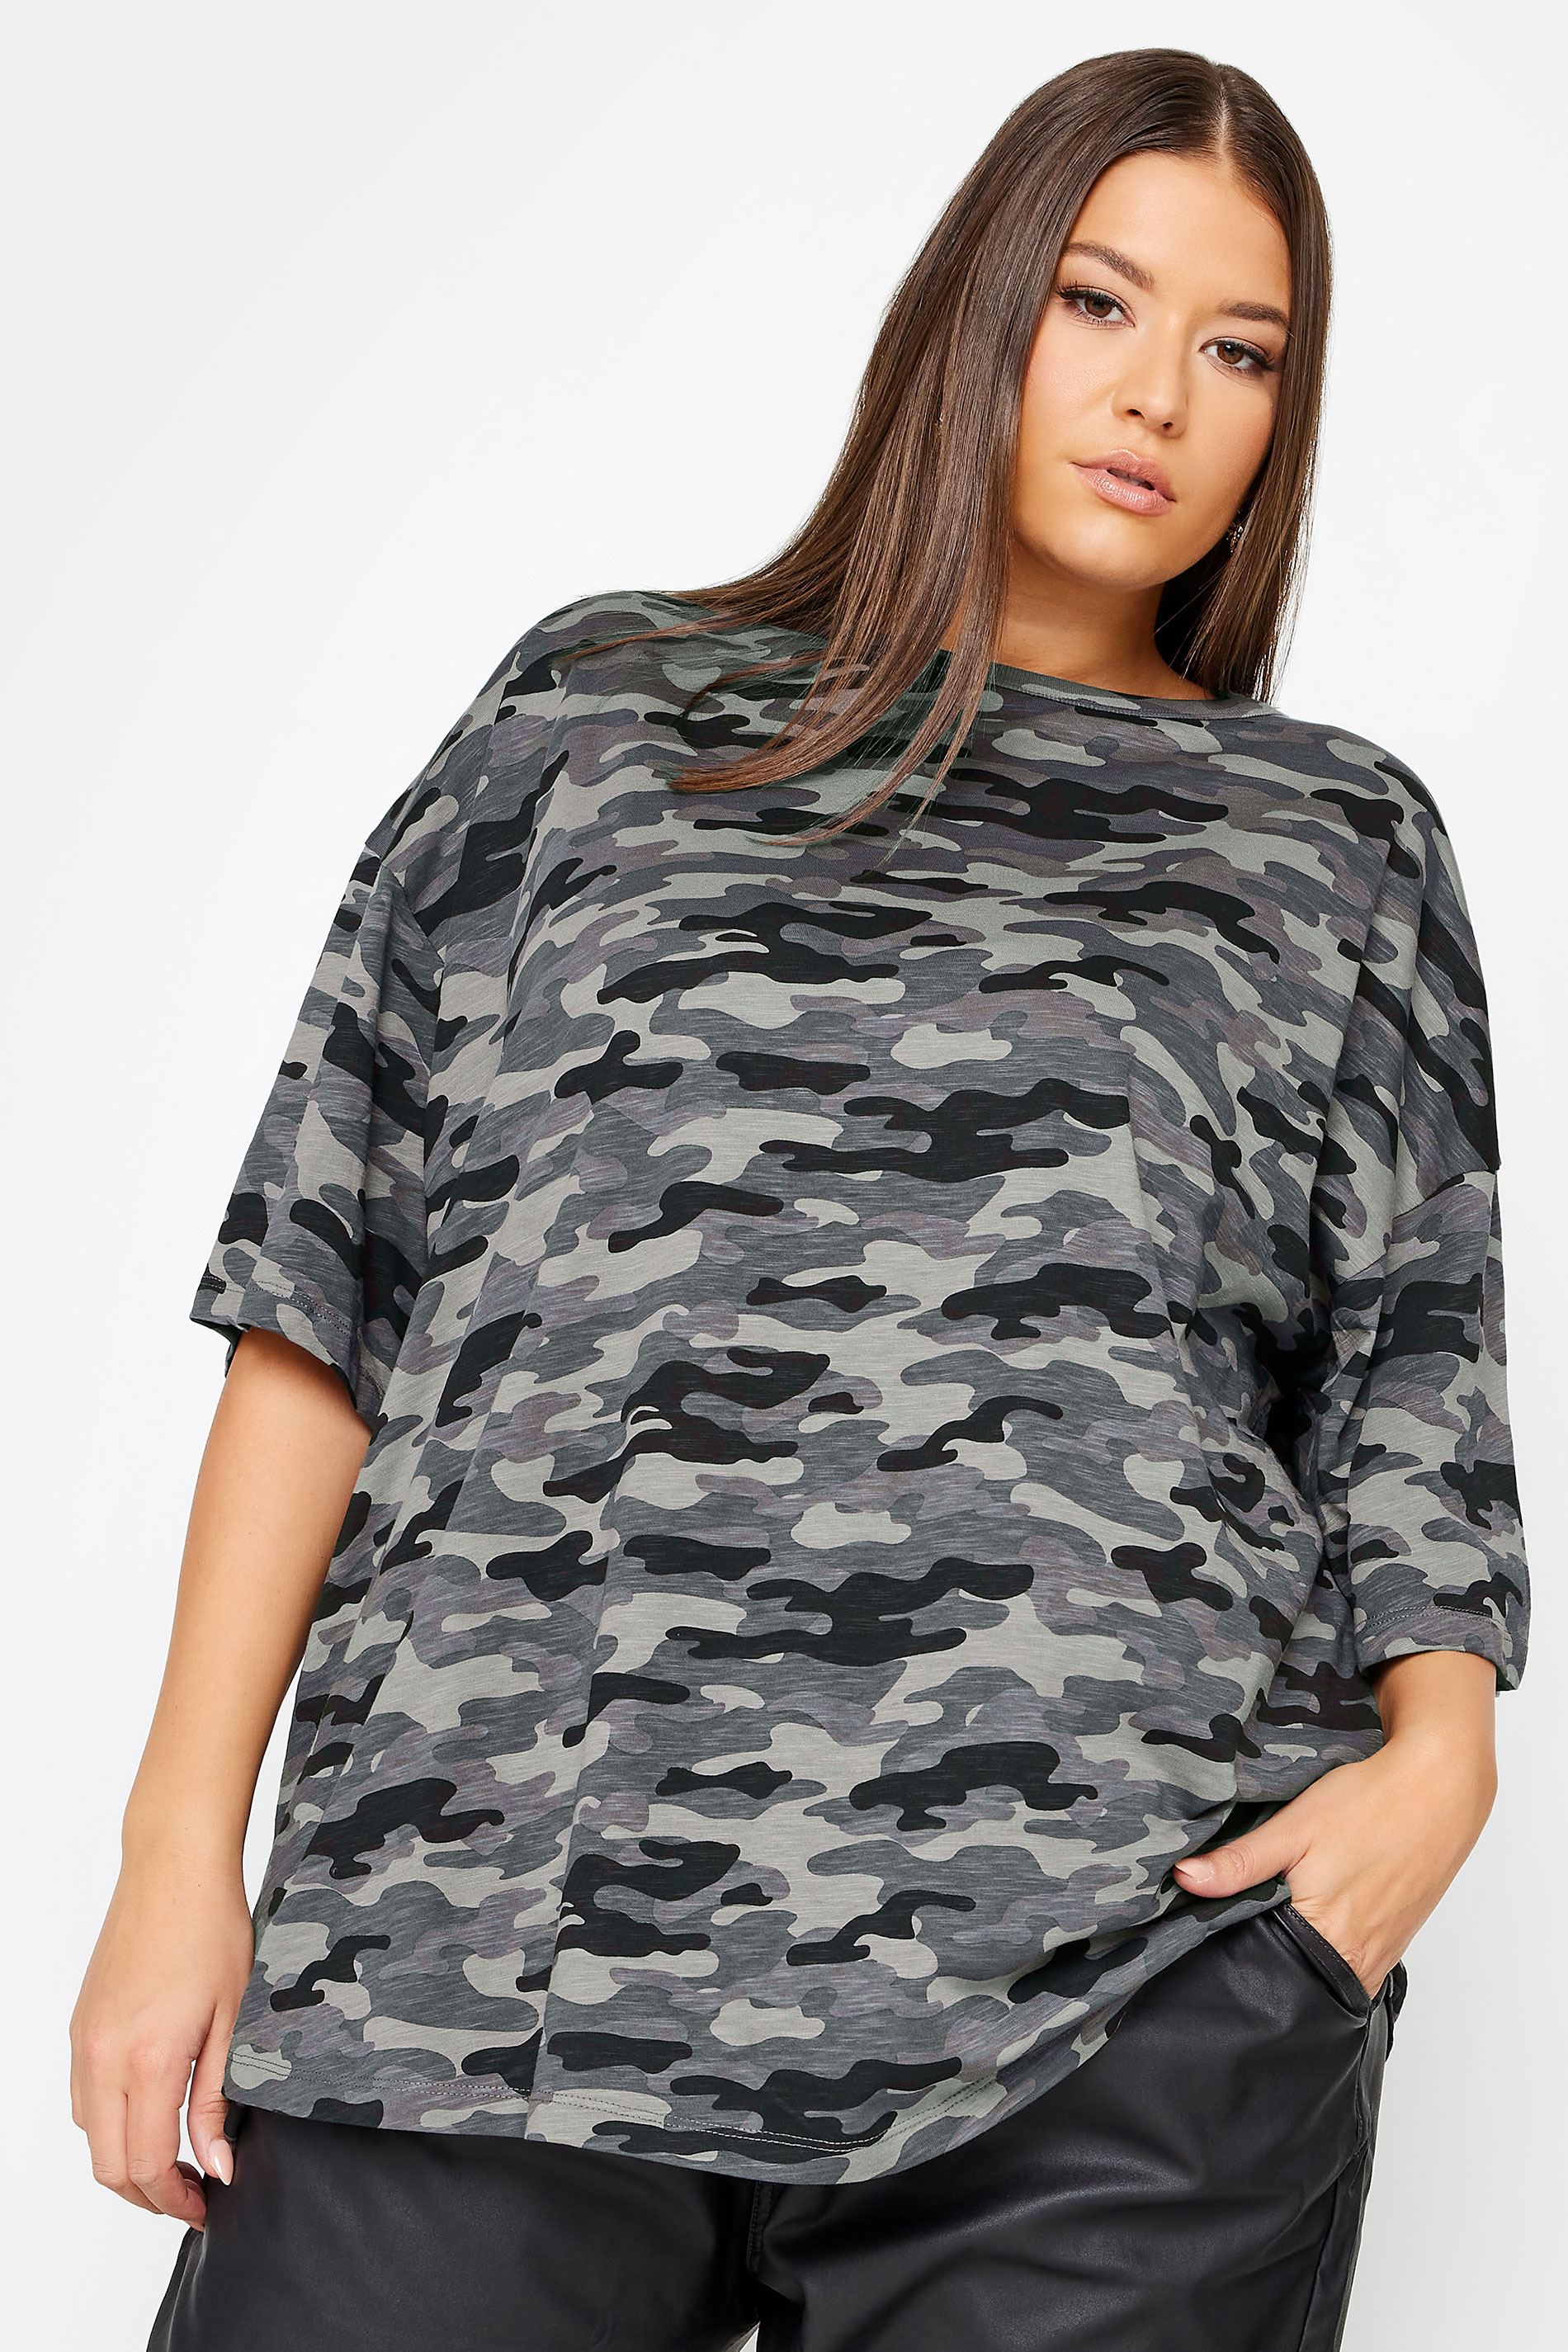 YOURS Plus Size Grey Camo Print Oversized Boxy T-Shirt | Yours Clothing  2